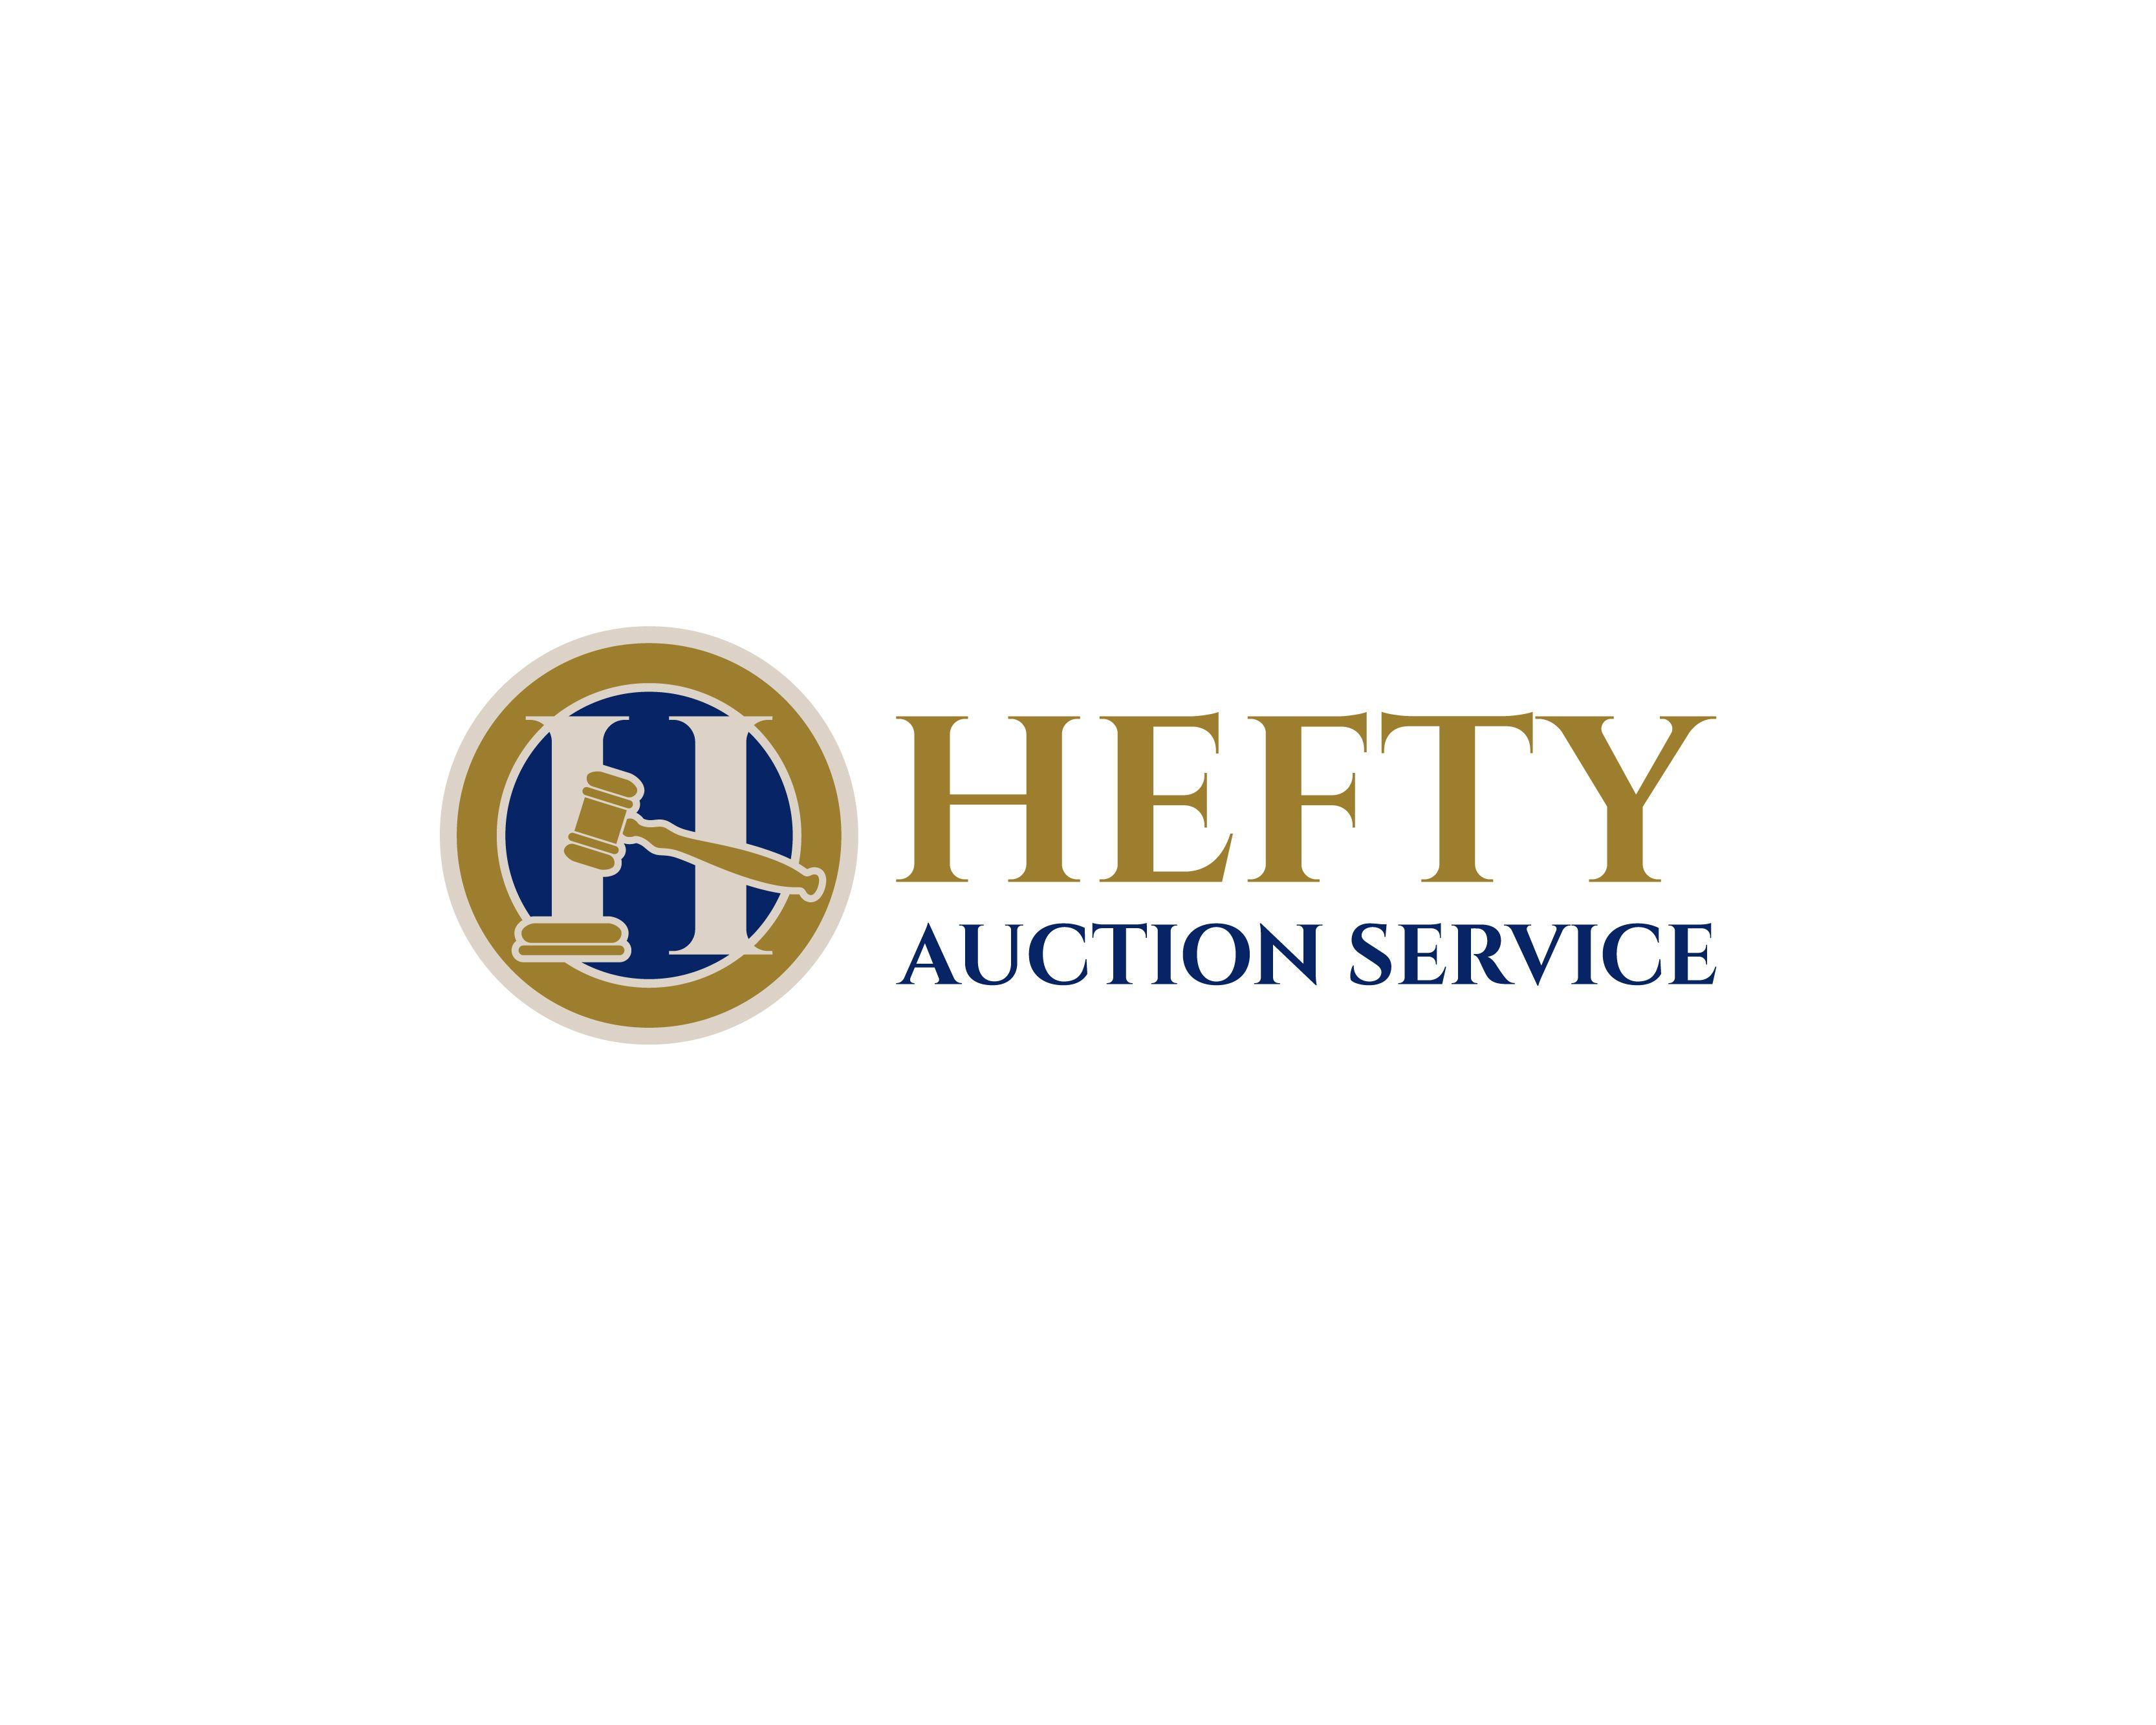 Auction Service Logo - Logo Design Contest for Hefty Auction Service | Hatchwise